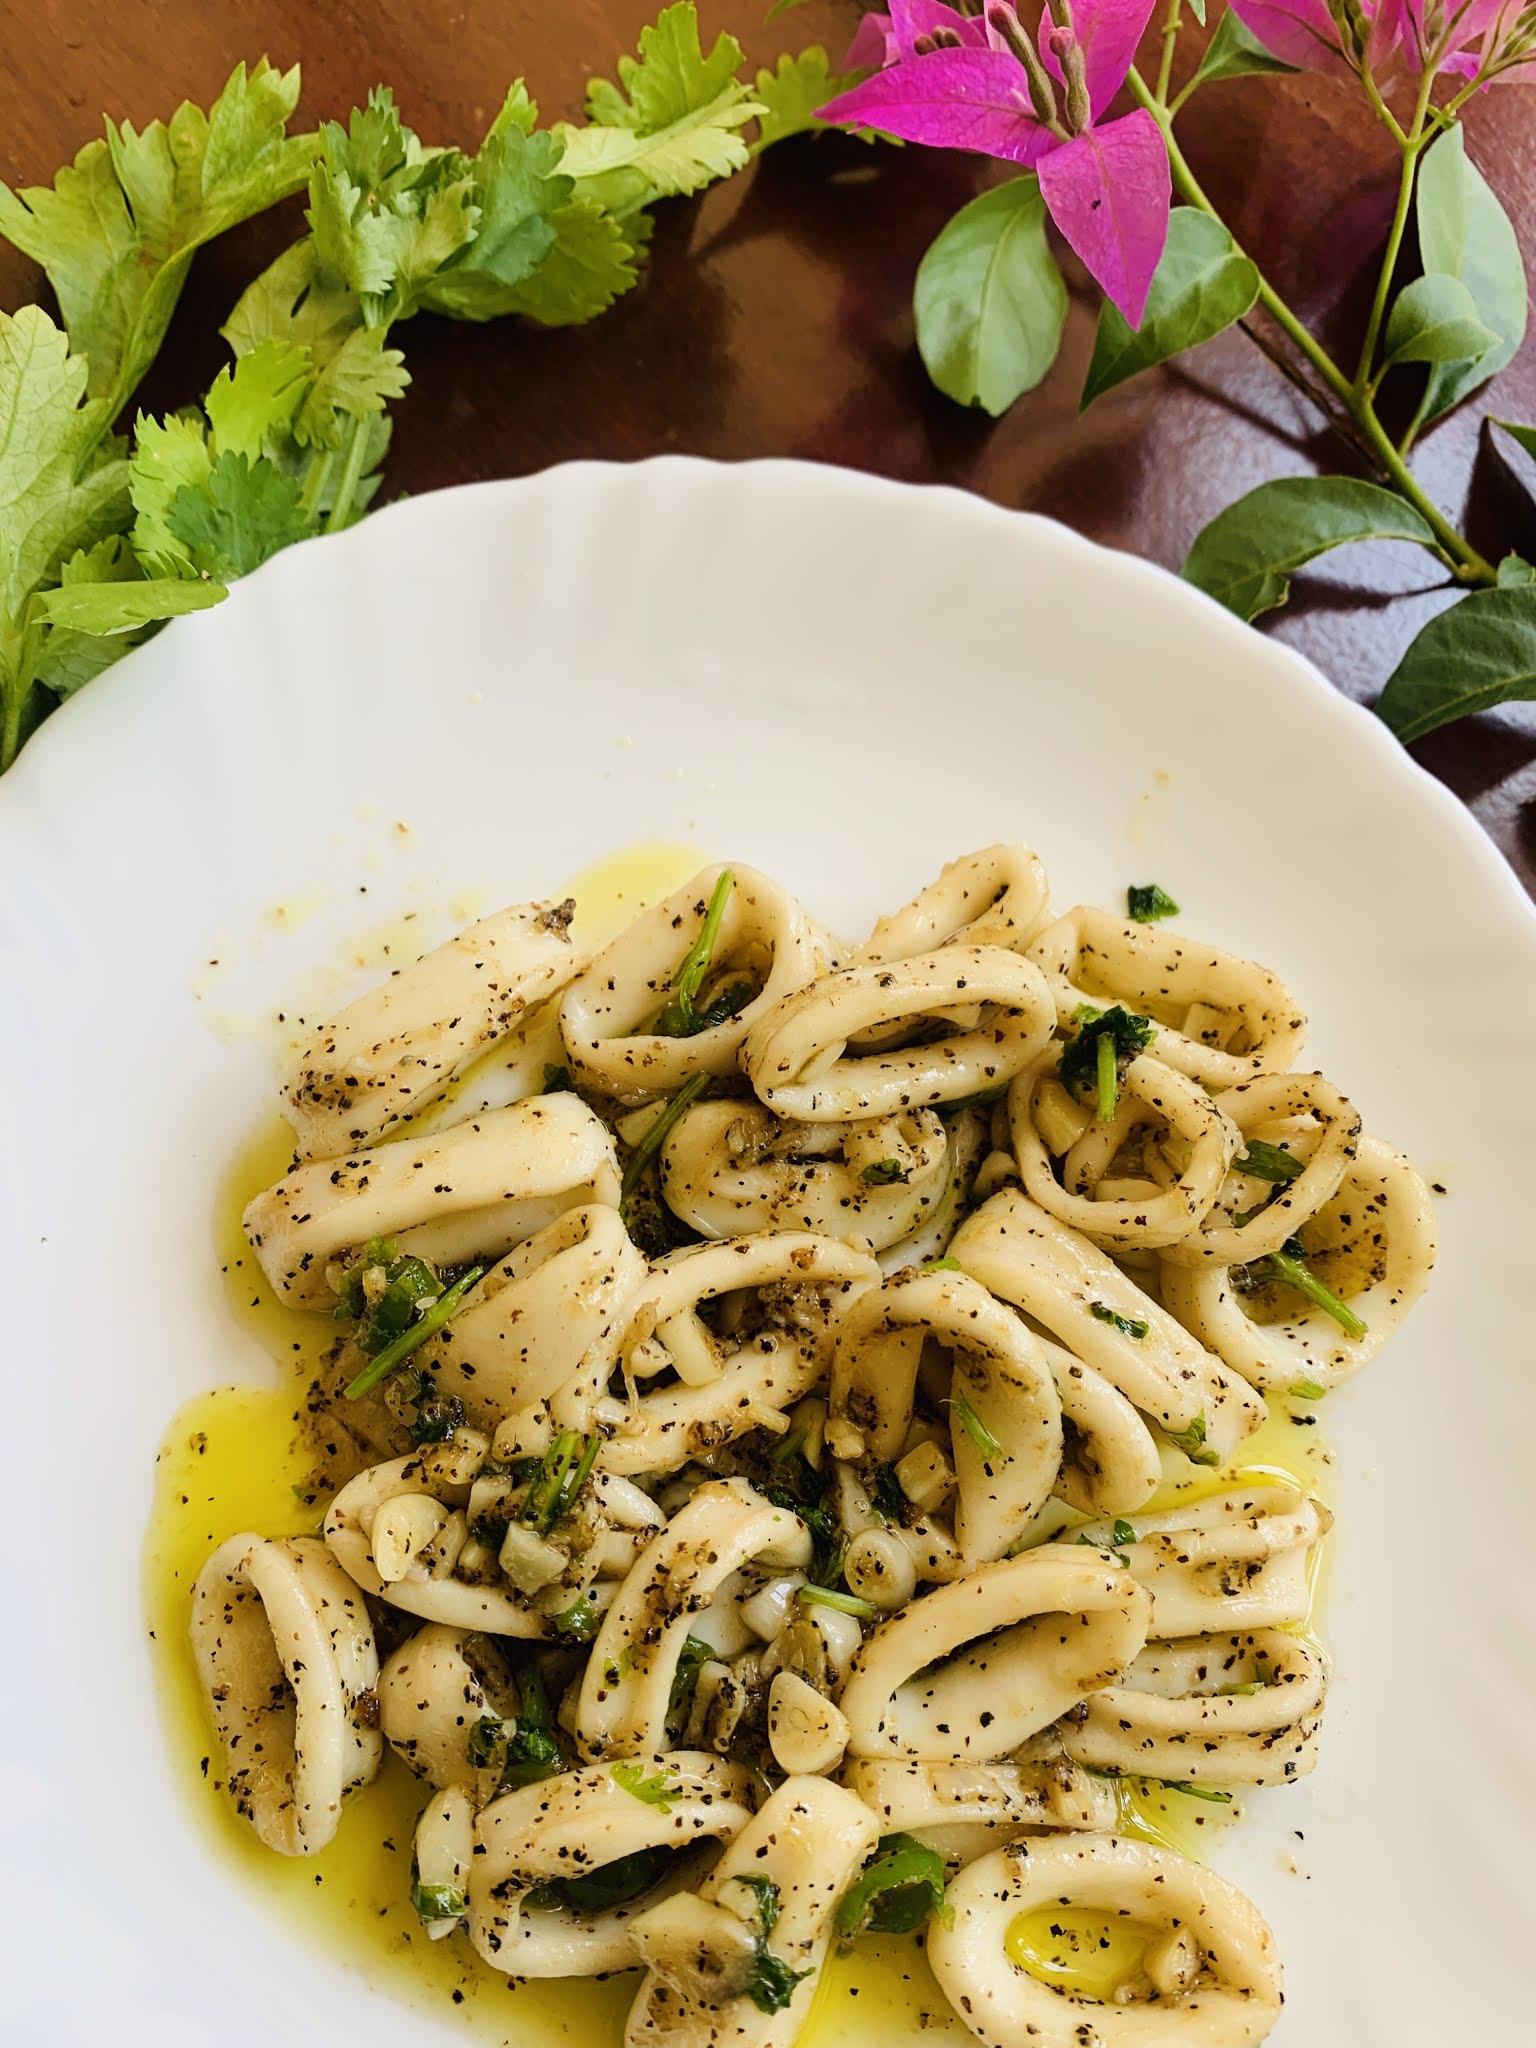 Greek Style garlic calamari recipe easy to make rich in flavor